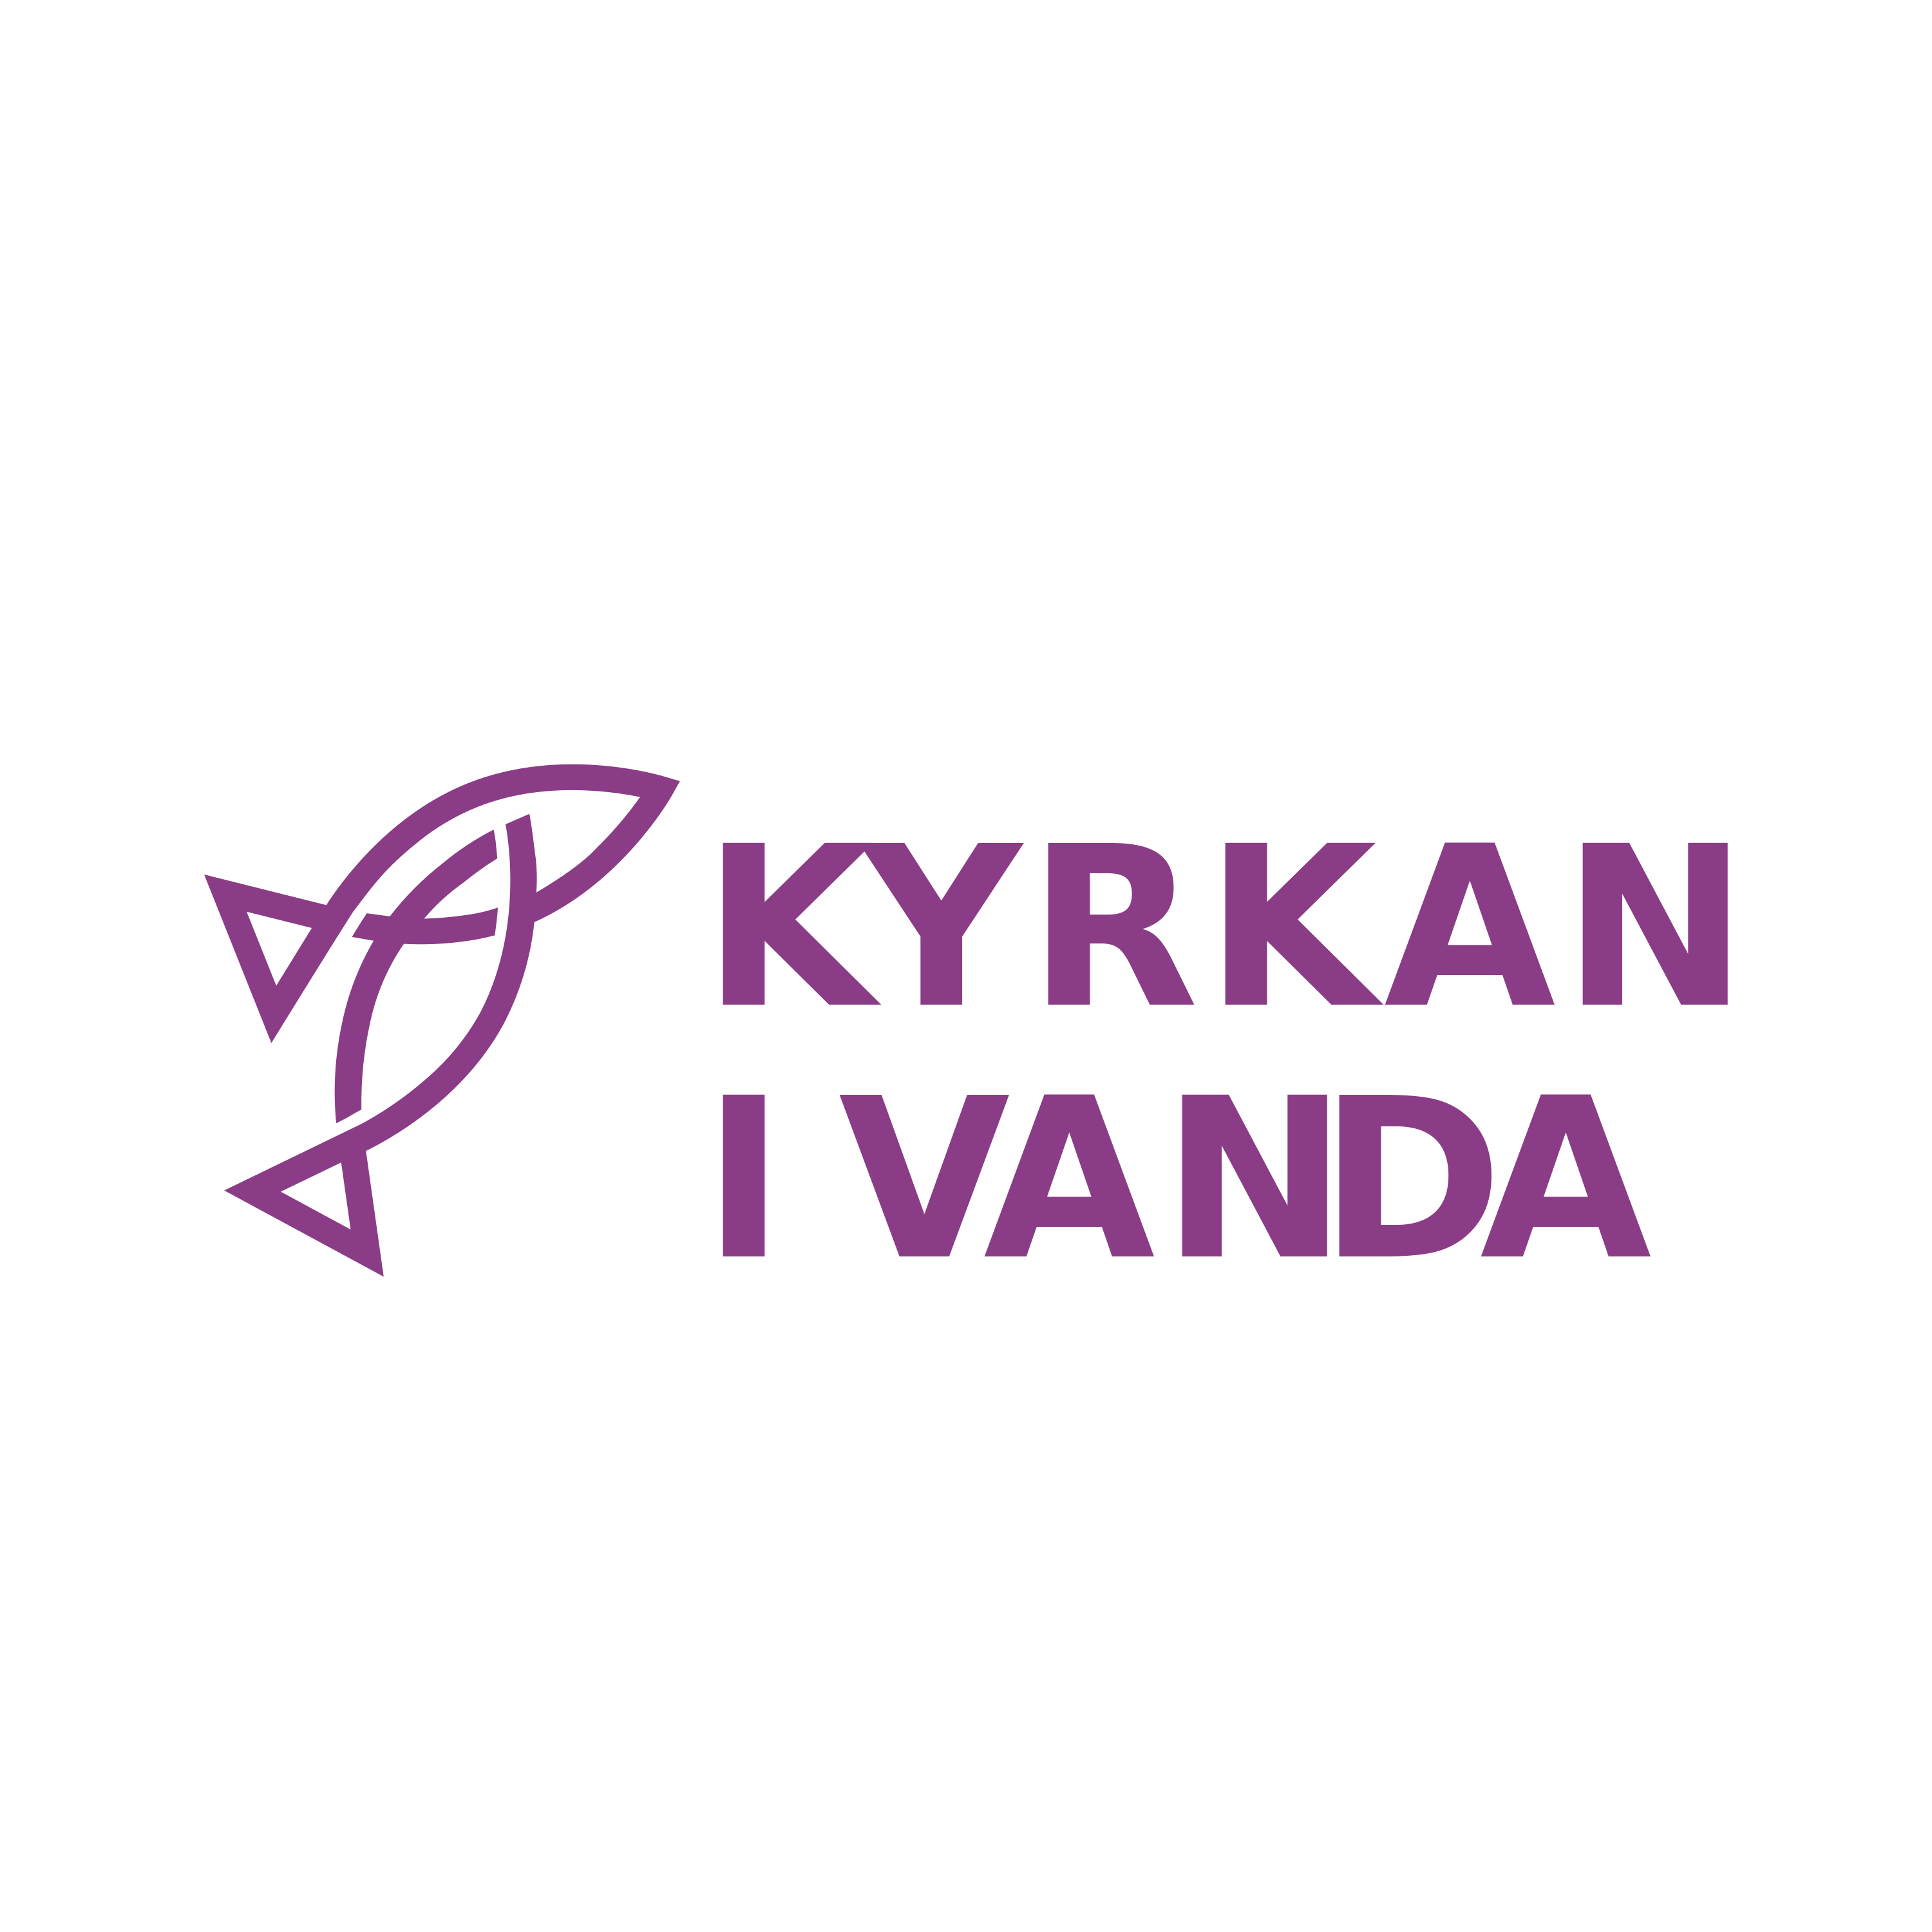 Kyrkan I Vanda Logo  Transparent Image